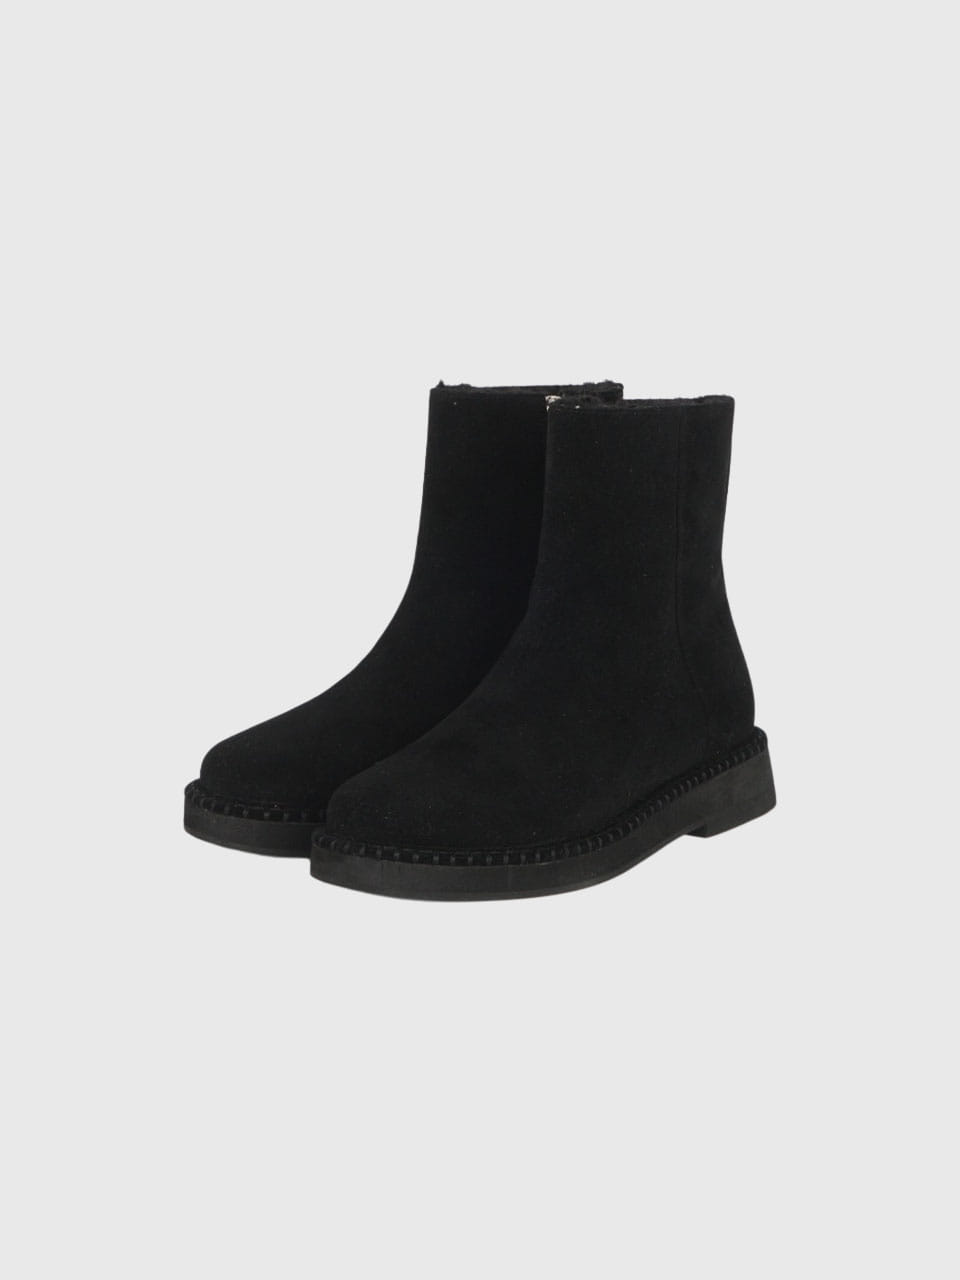 Mogul Ankle Boots (Black_winter ver.)